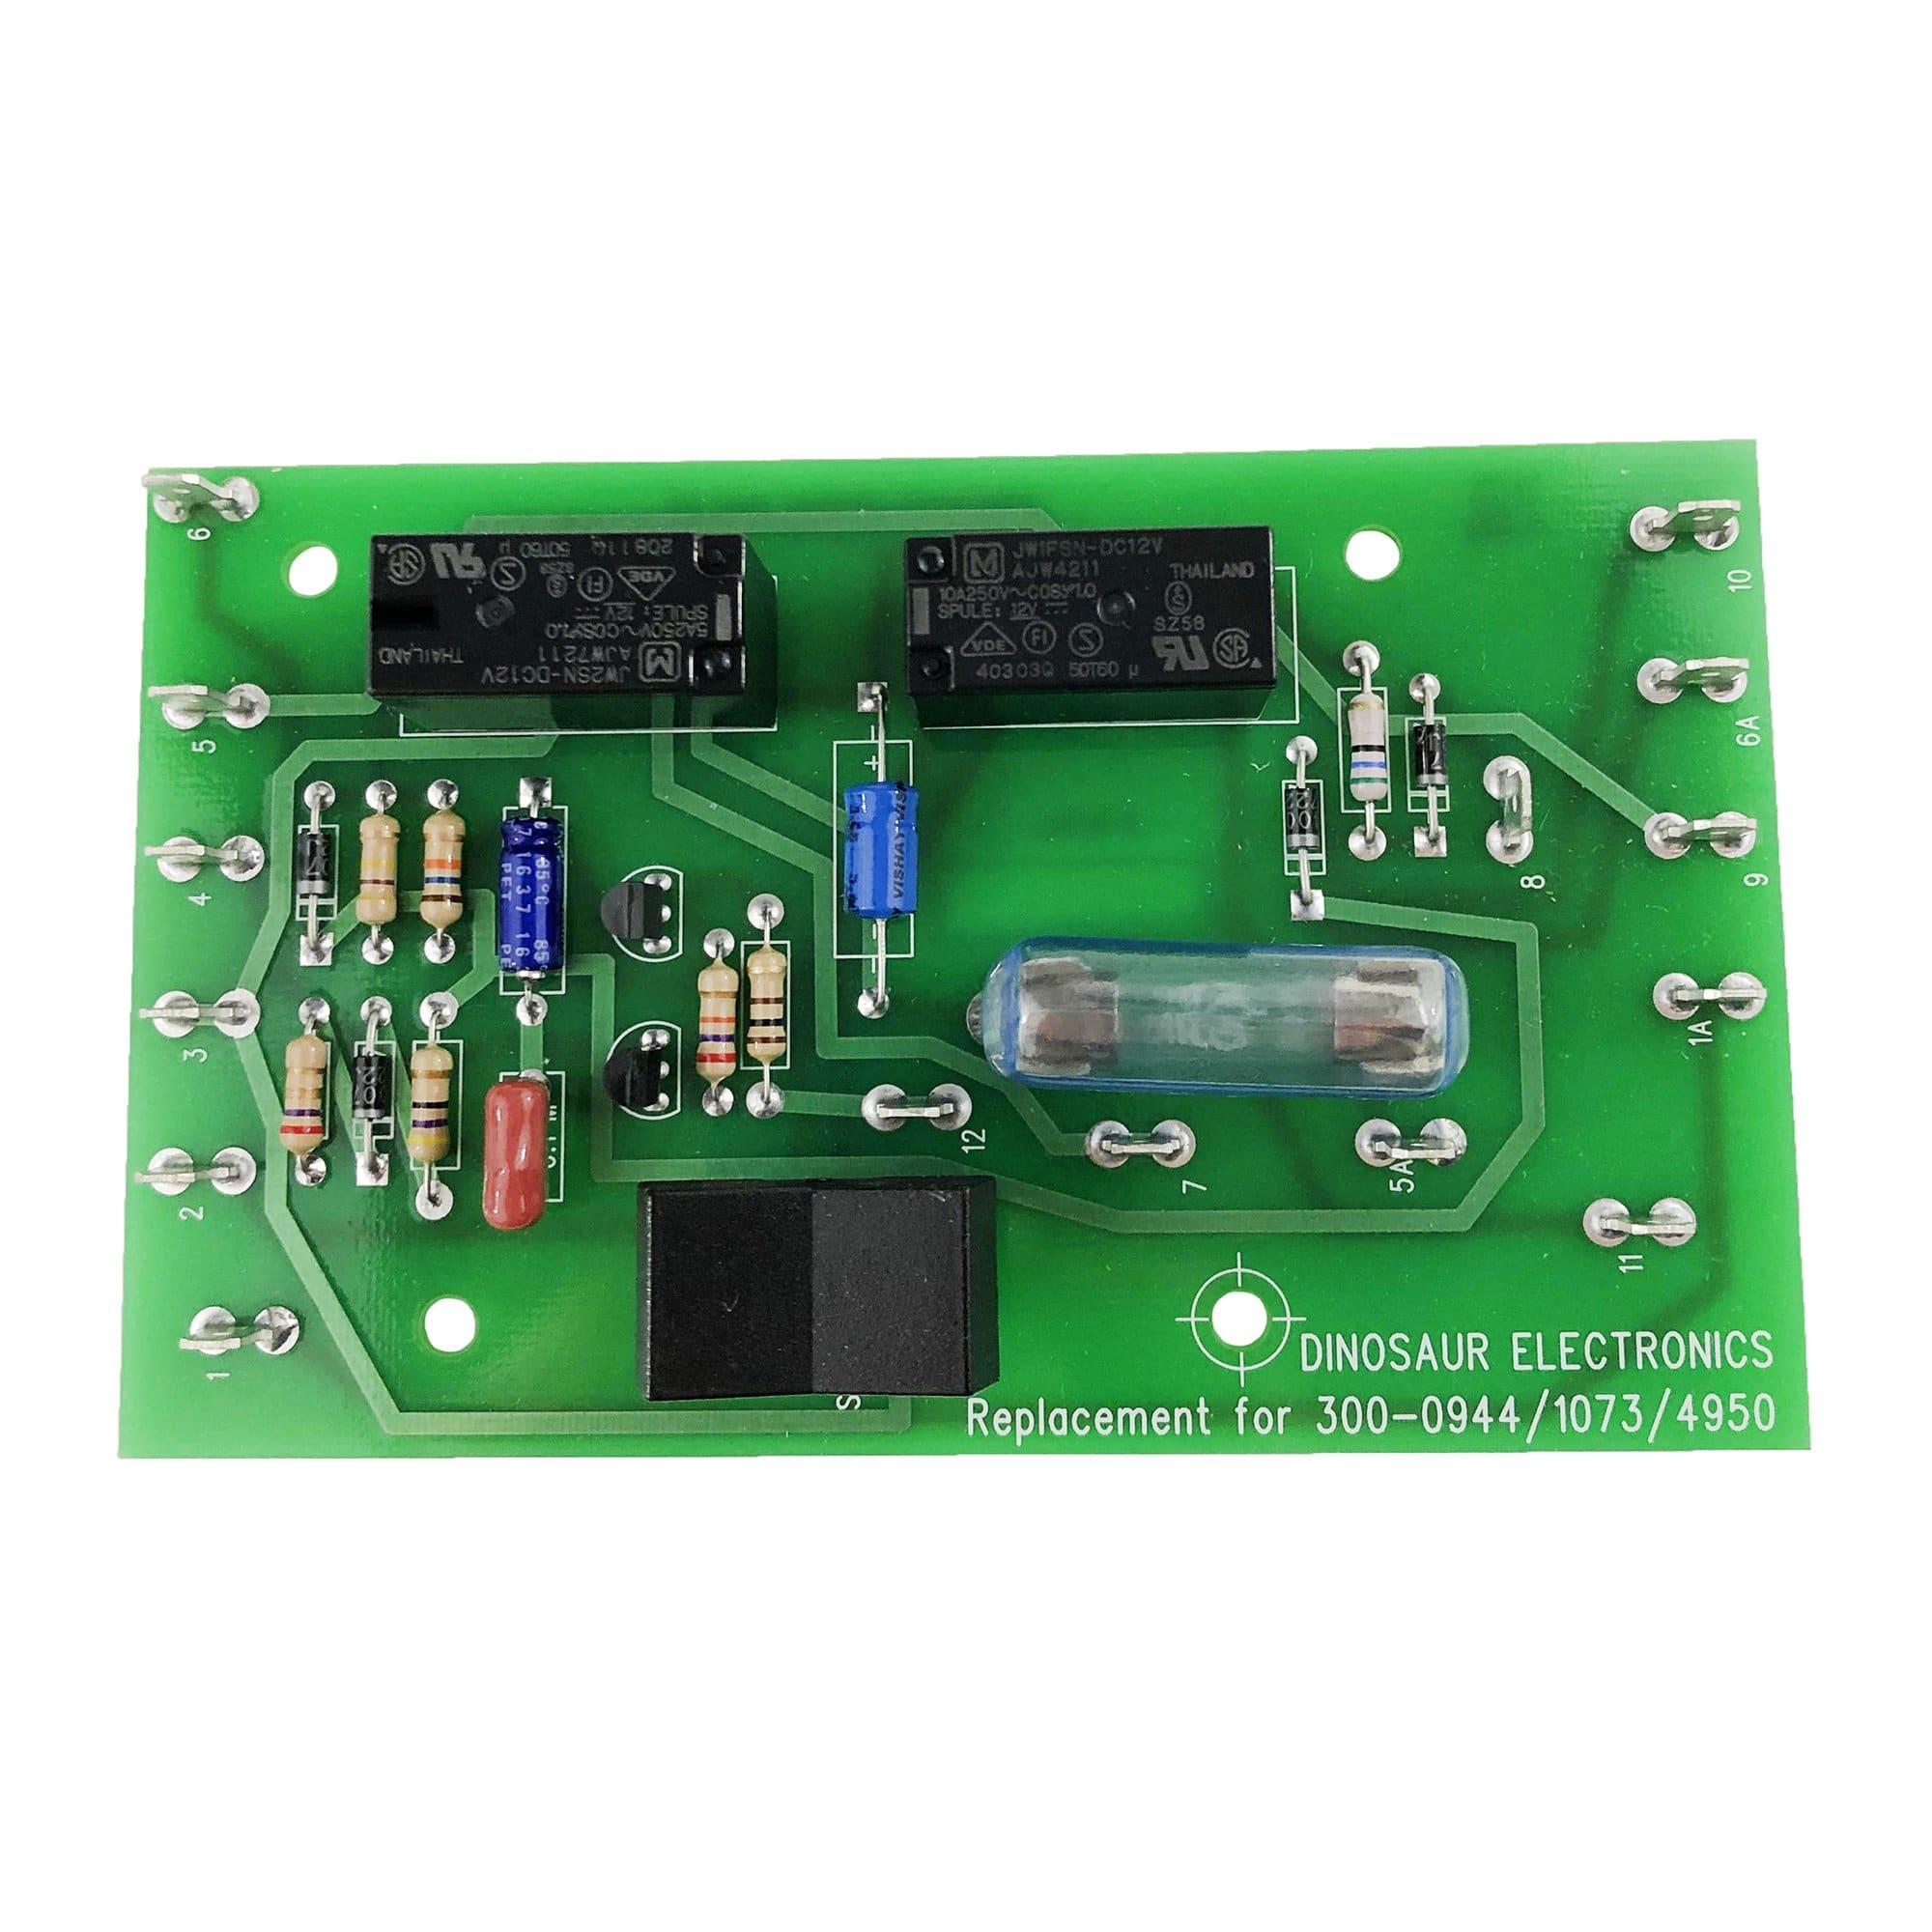 Dinosaur 300-1073/4950 Onan Replacement Circuit Board